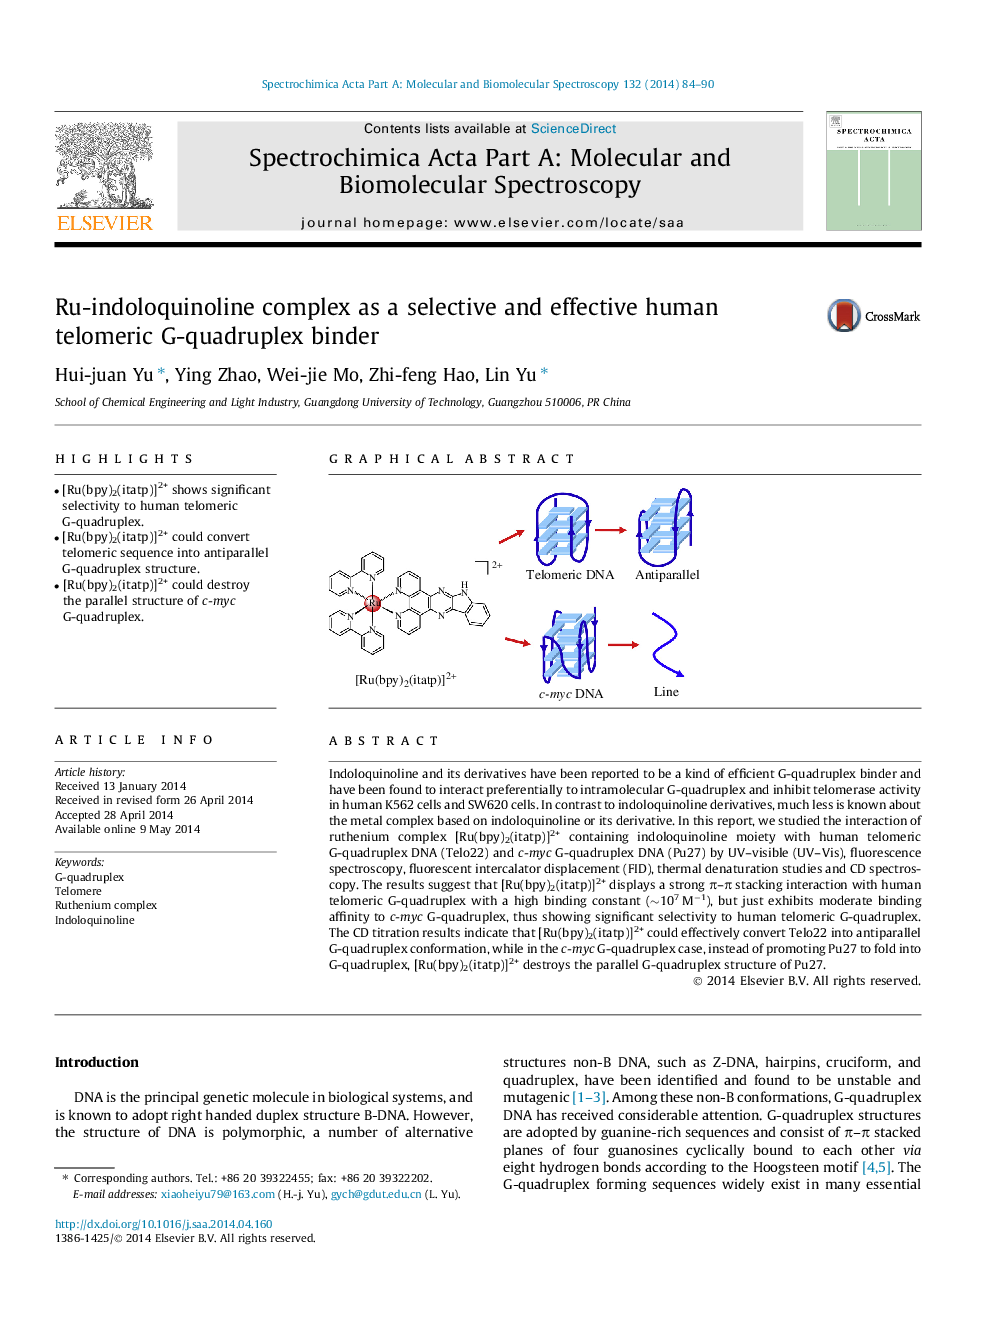 Ru-indoloquinoline complex as a selective and effective human telomeric G-quadruplex binder